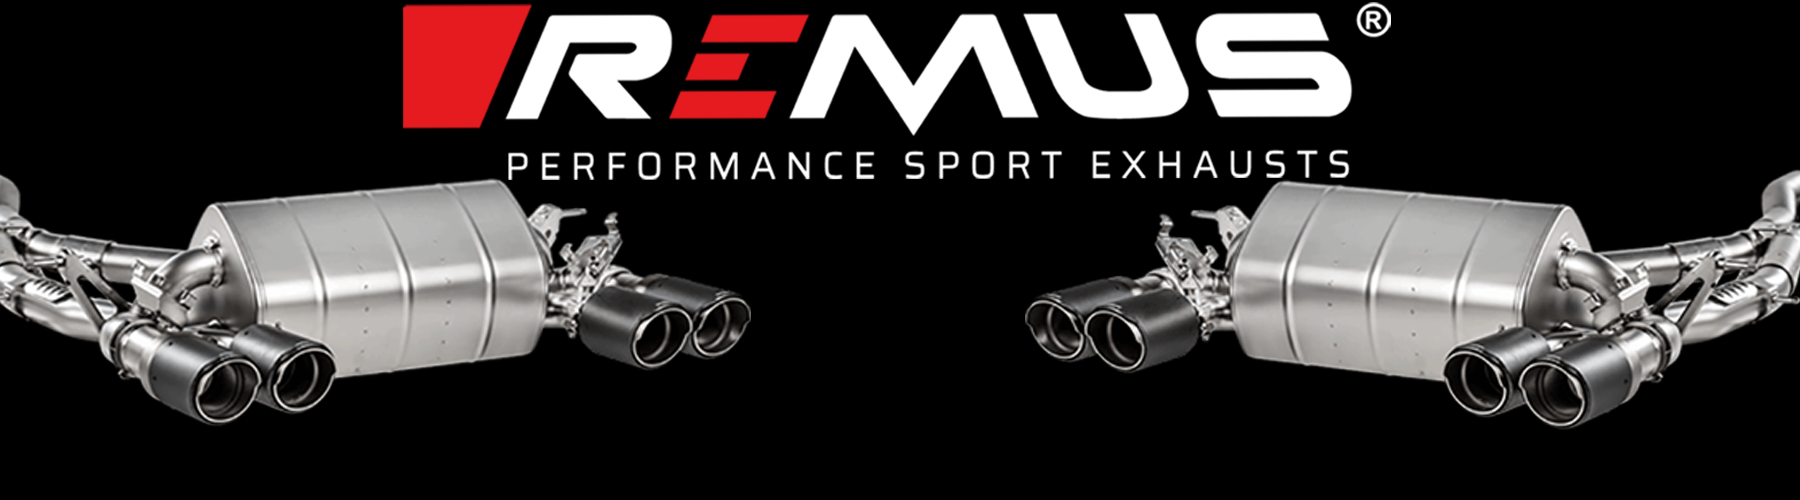 Remus Performance Sport Exhausts